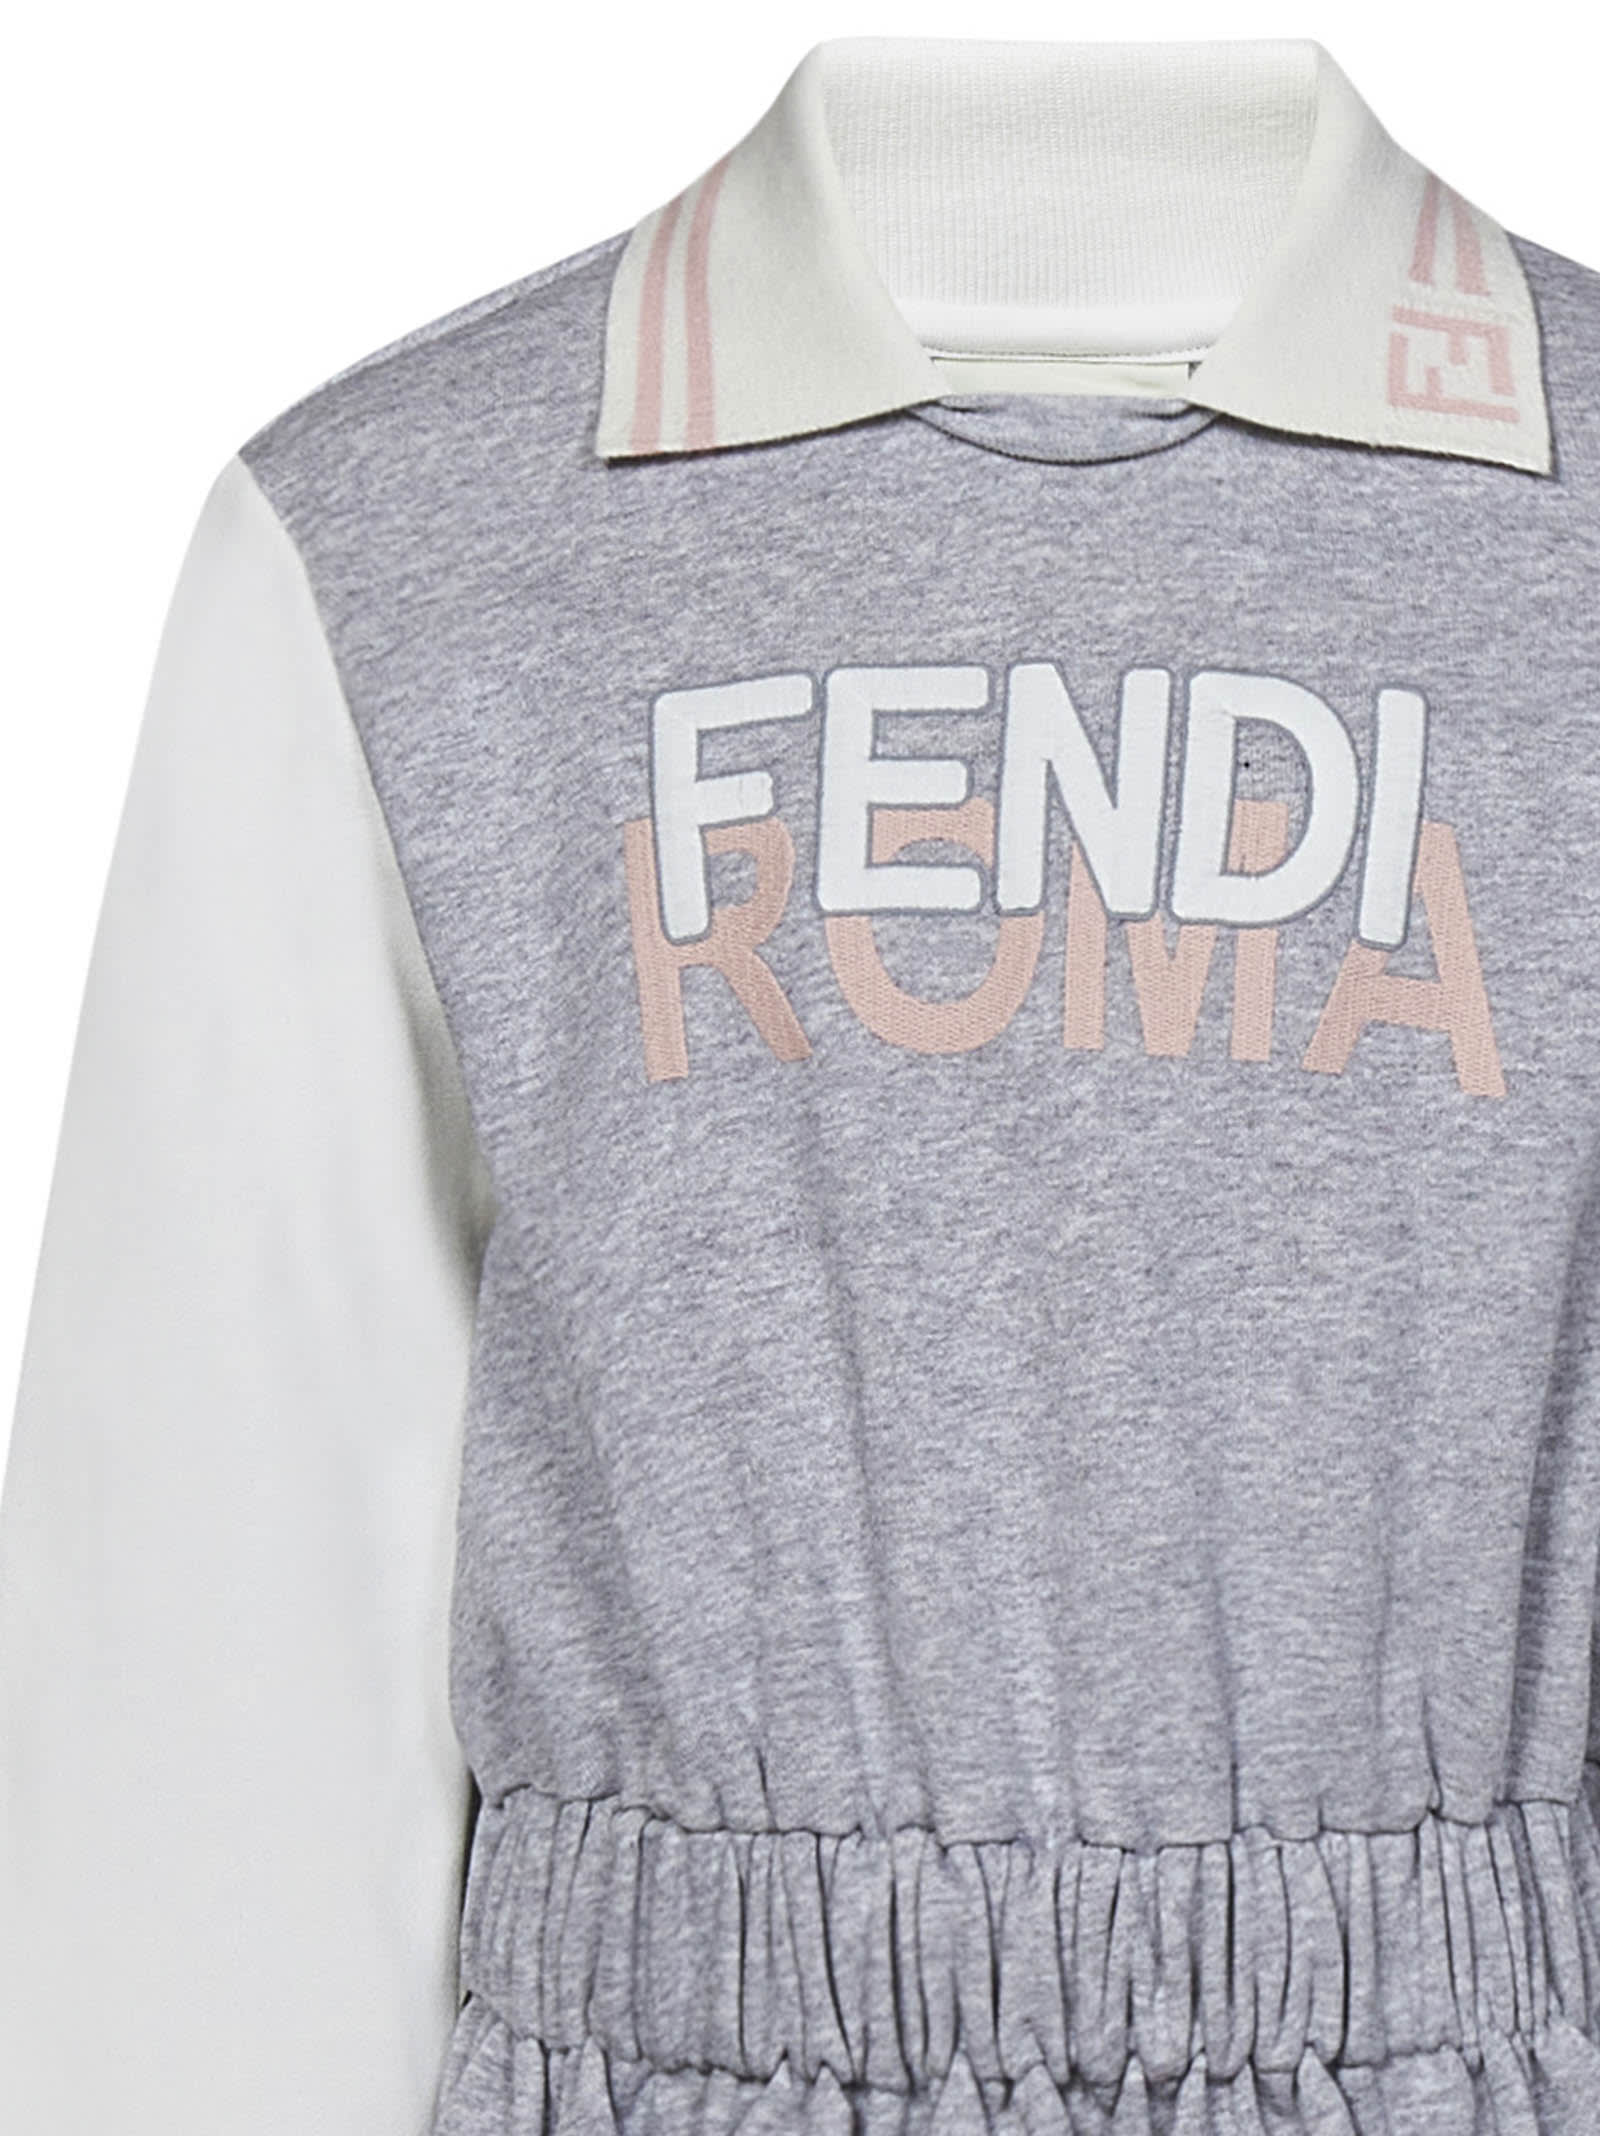 Shop Fendi Dress In Grey